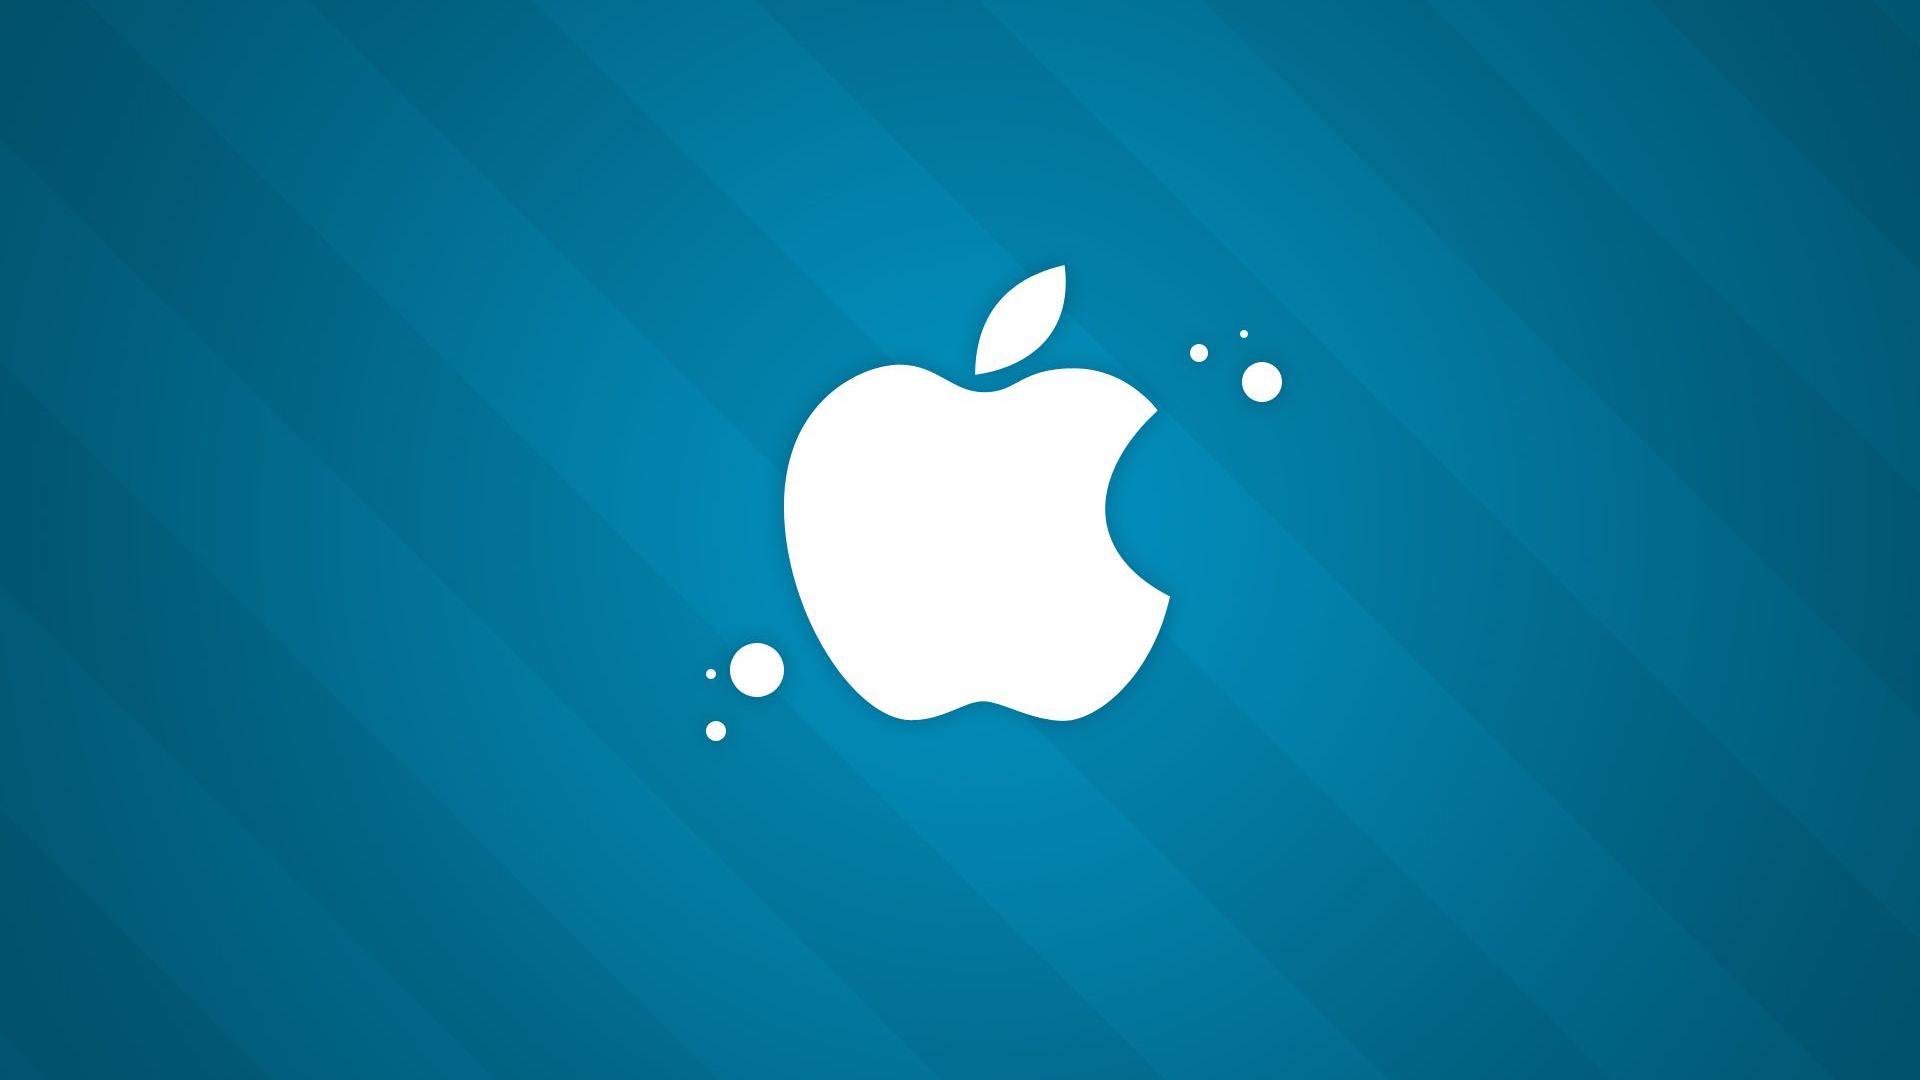 Apple Logo 41 19122 Image HD Wallpaper. Wallpaper & Background